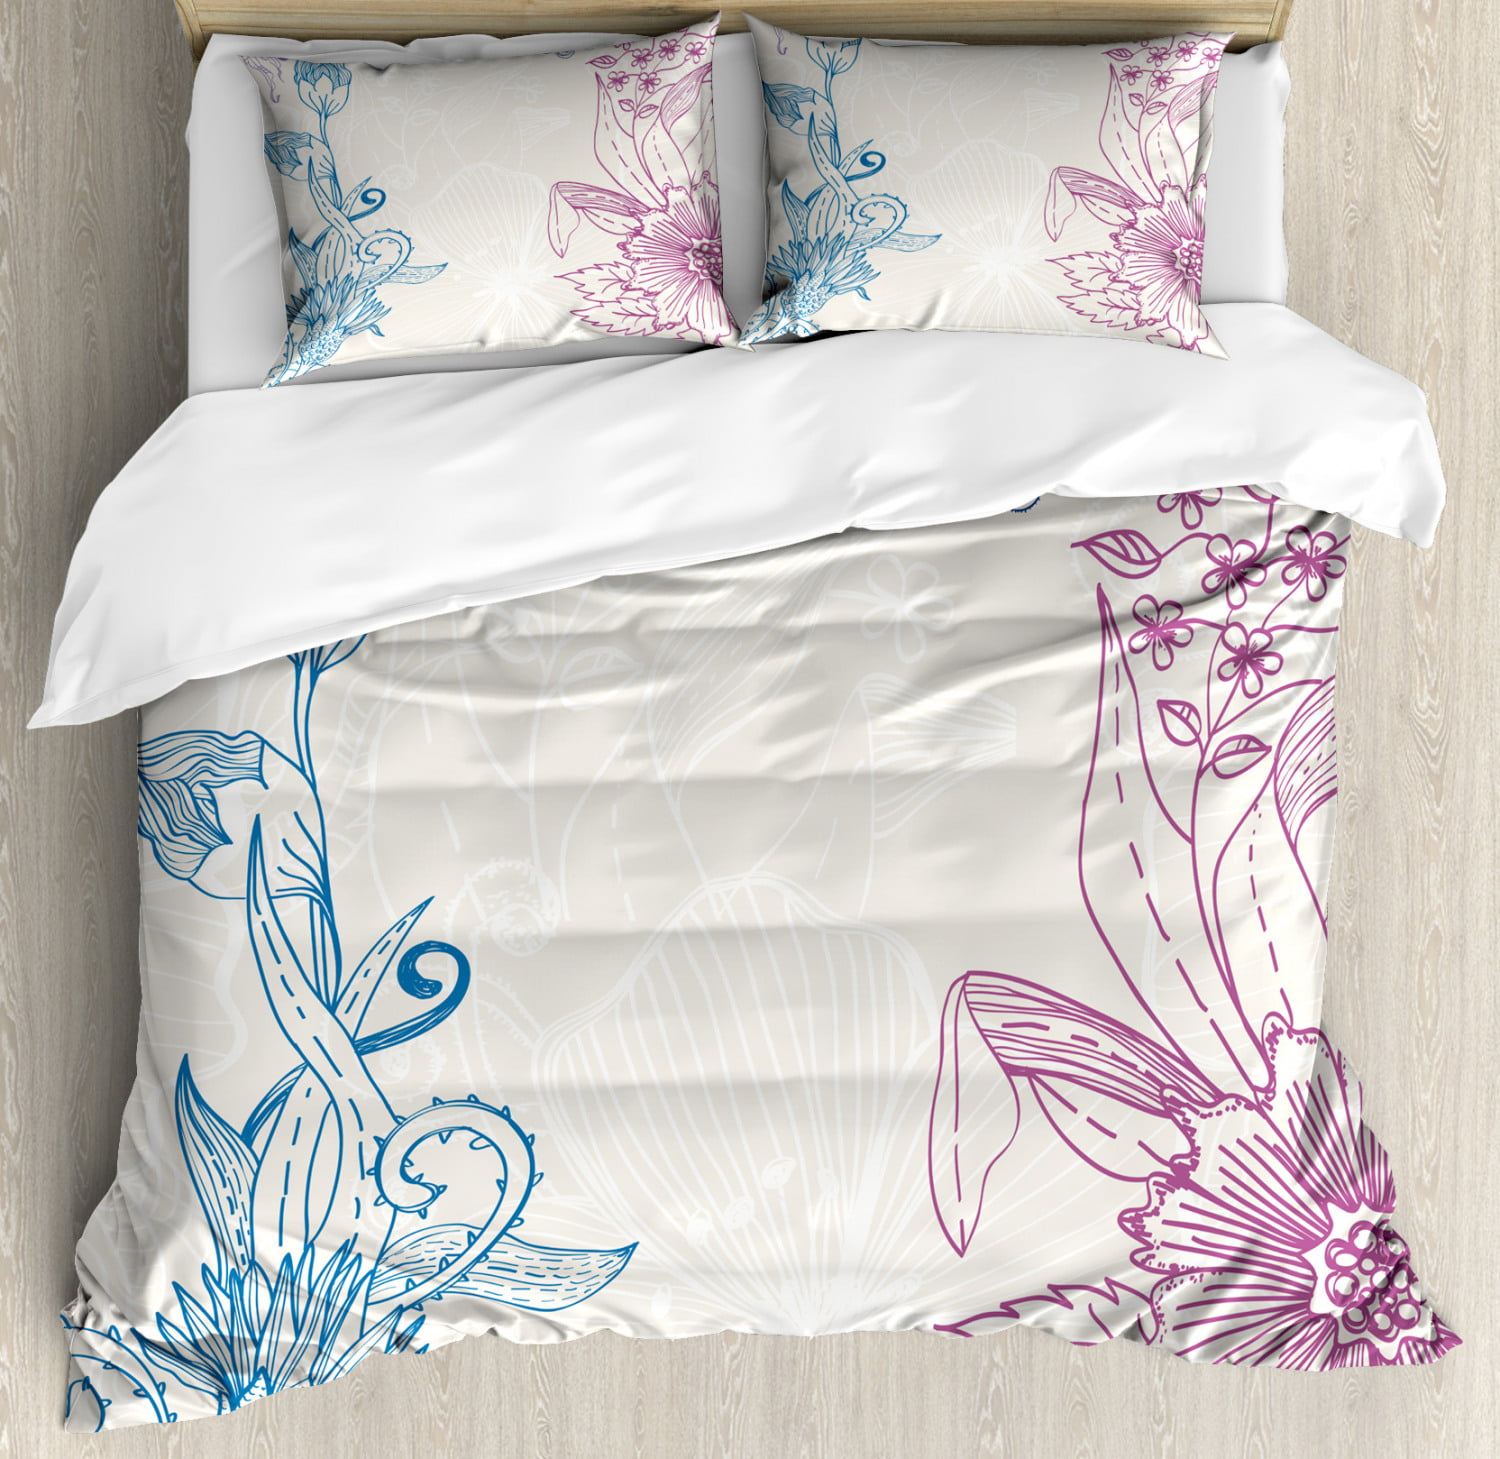 Wise Owls Reversible Duvet Cover Bedding Bed Set Flowers Black Plum Red Teal 